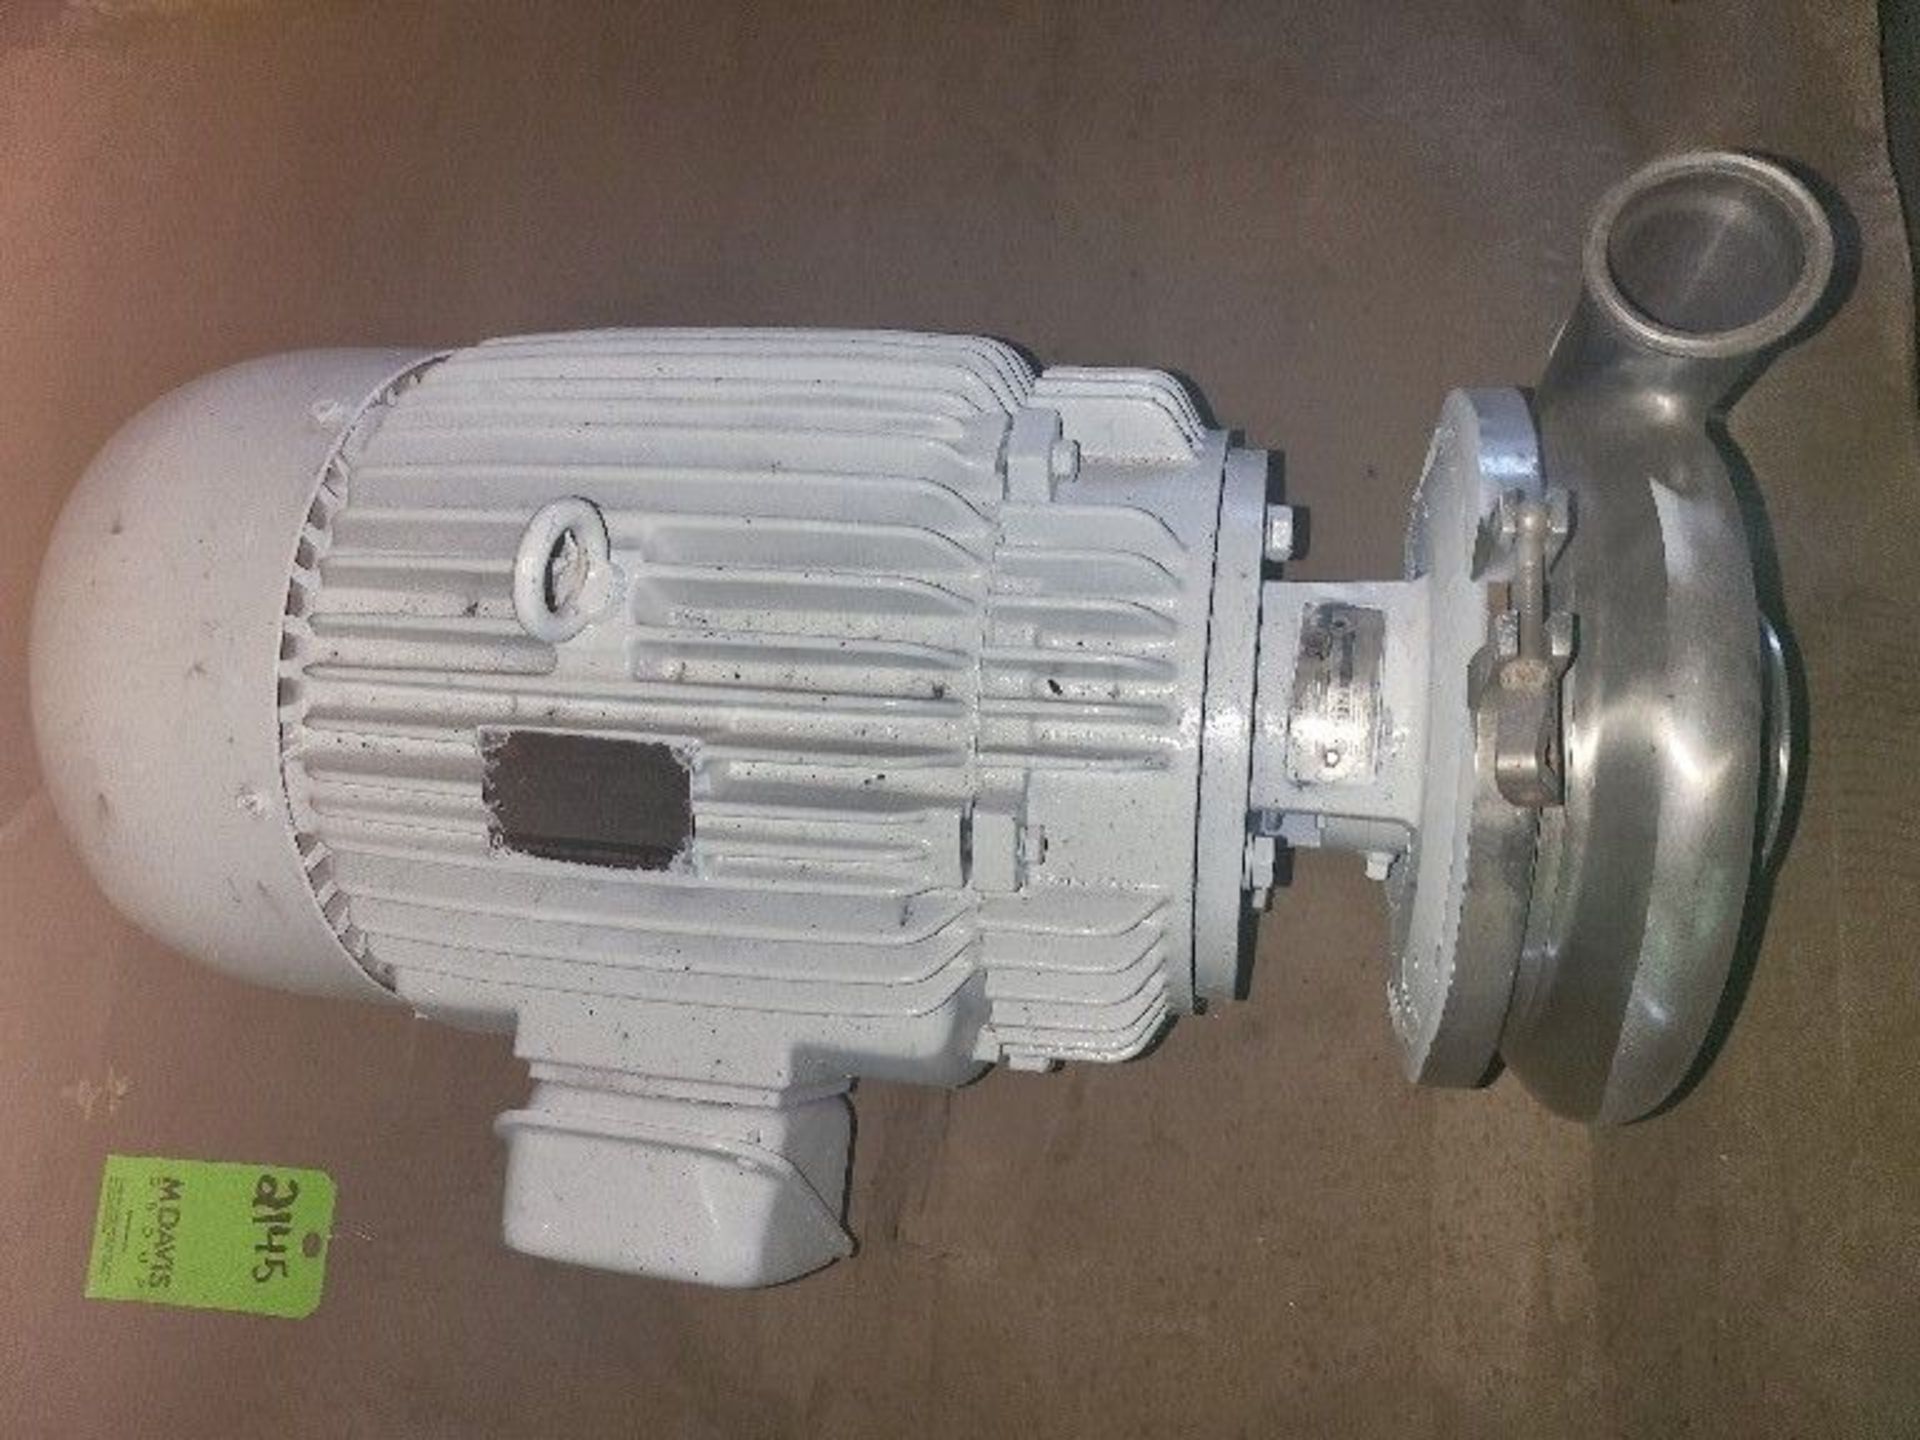 Qty (1) Waukesha Sanitary Centrifugal Pump - 15 hp - 3530 rpm - 3 phase - 4 inch inlet - 2 1/2